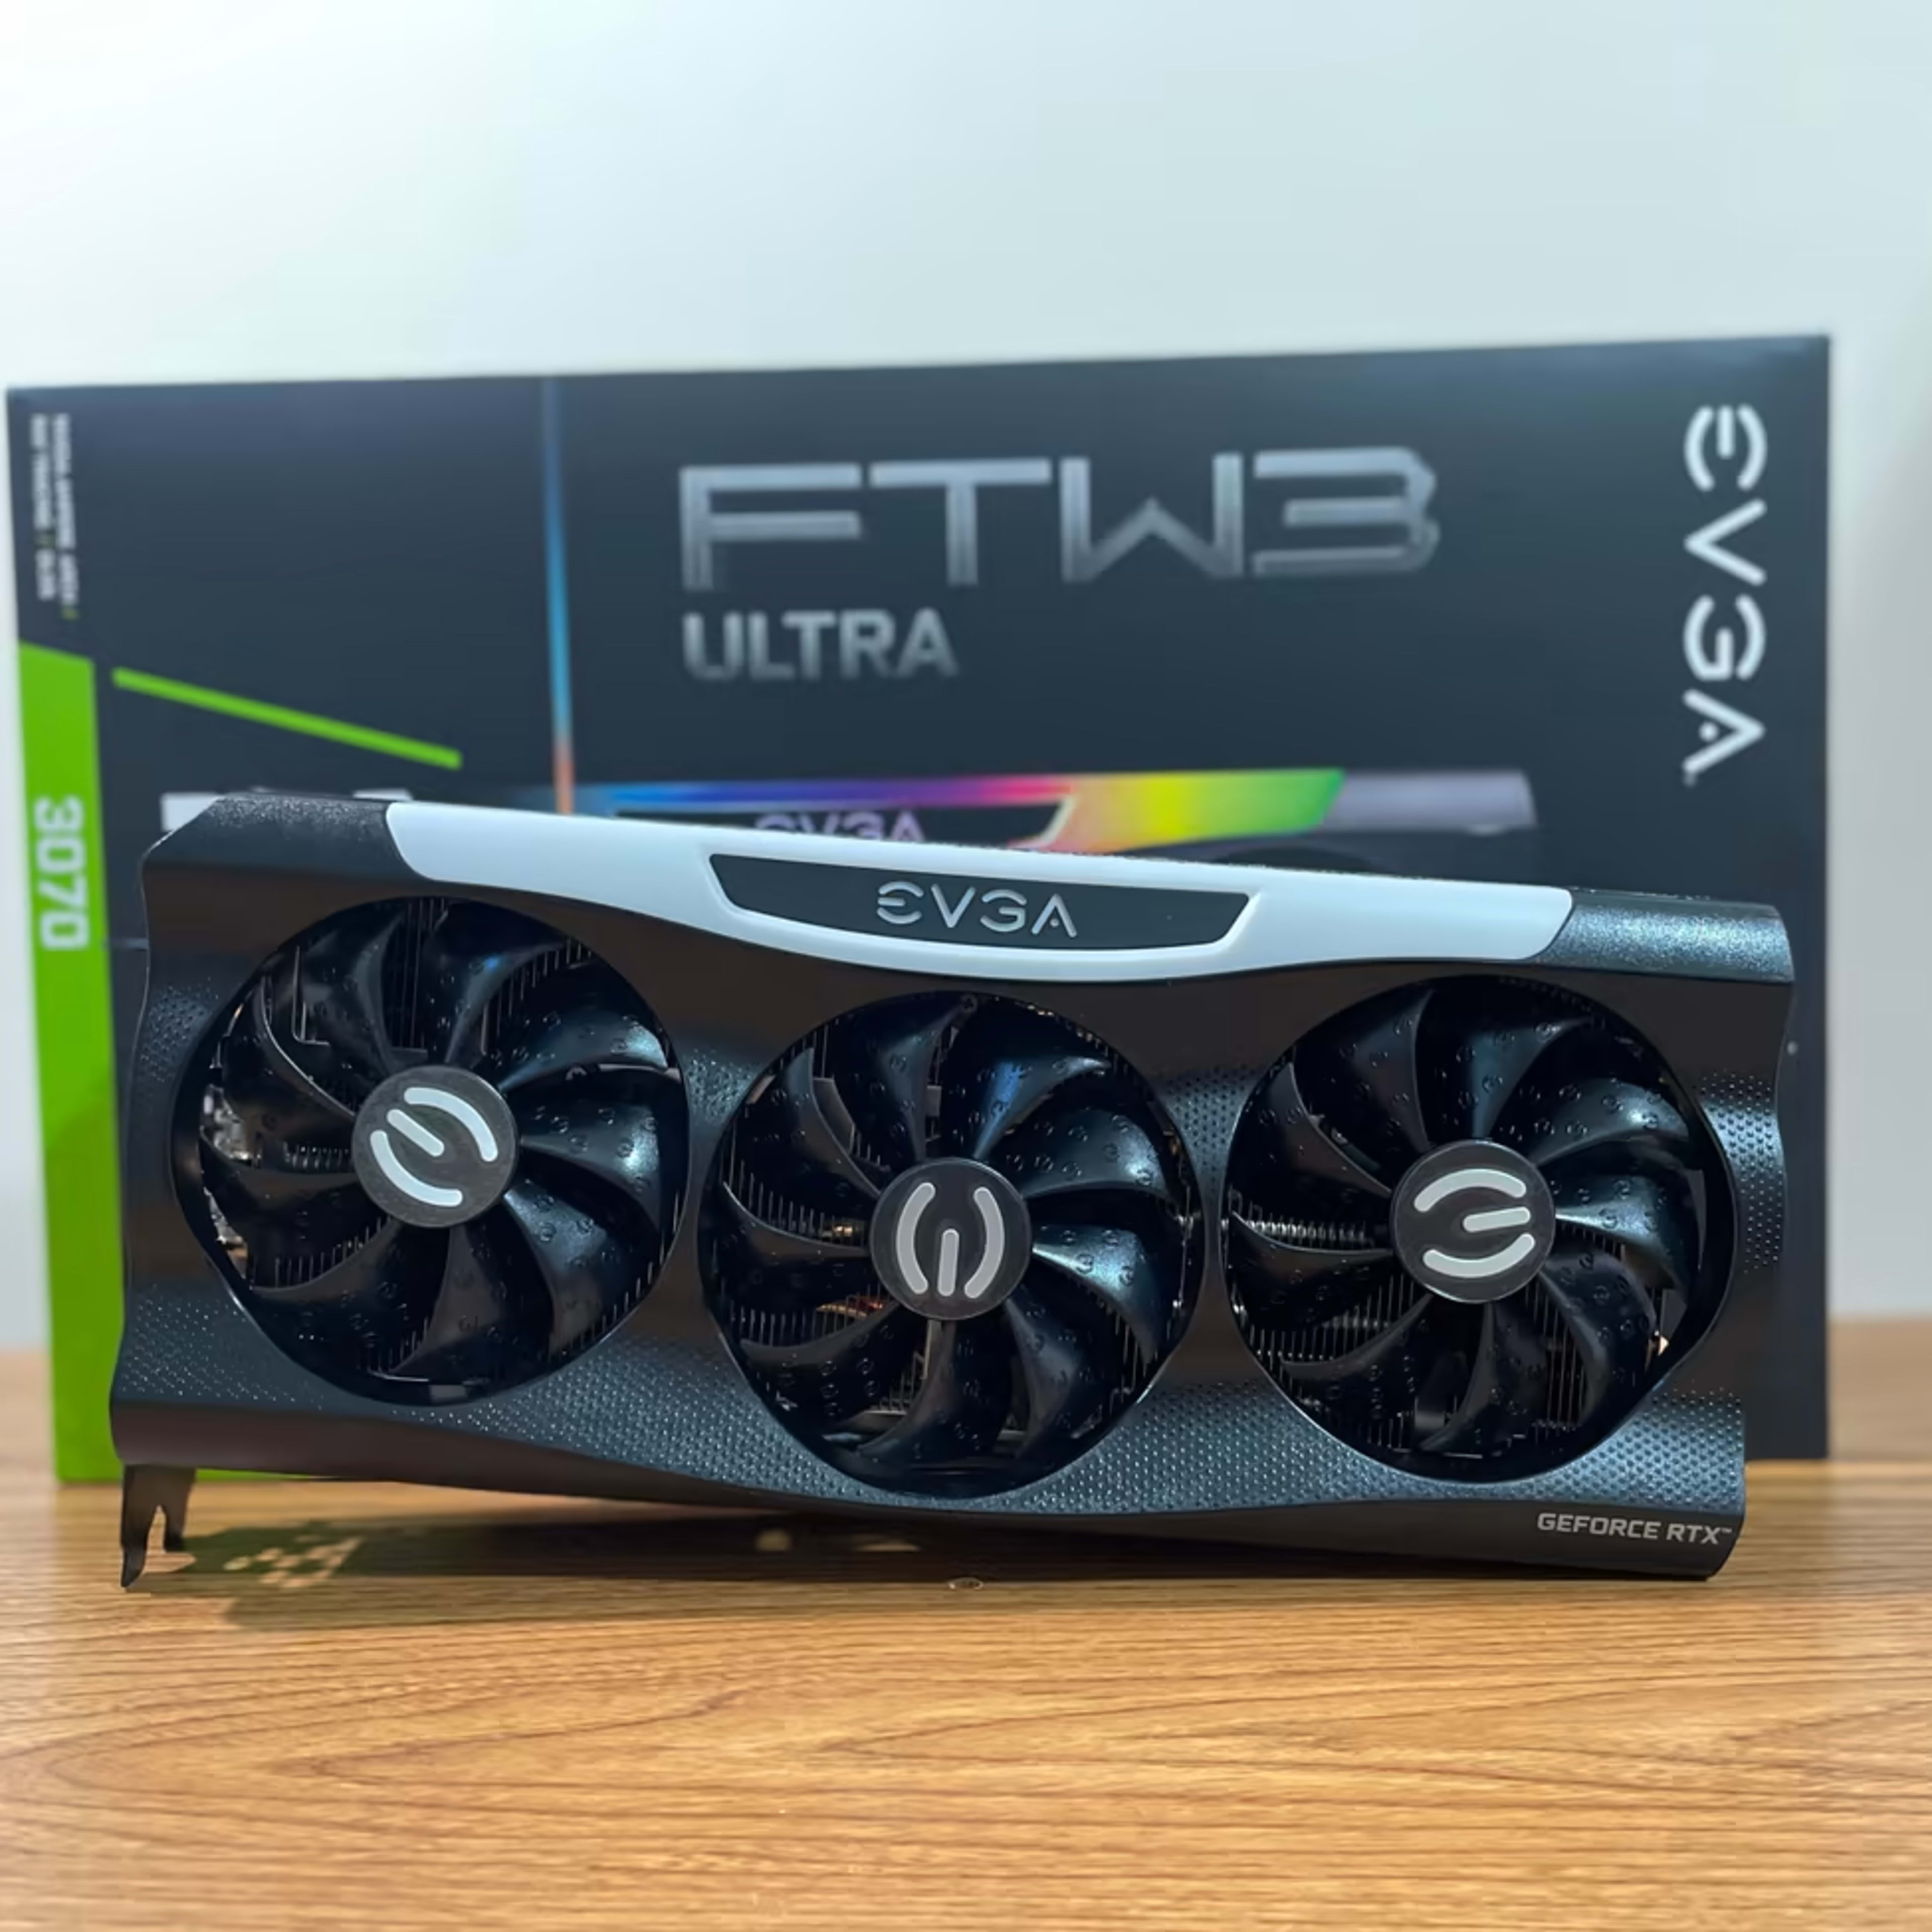 EVGA RTX 3070 FTW 3 8GB GPU